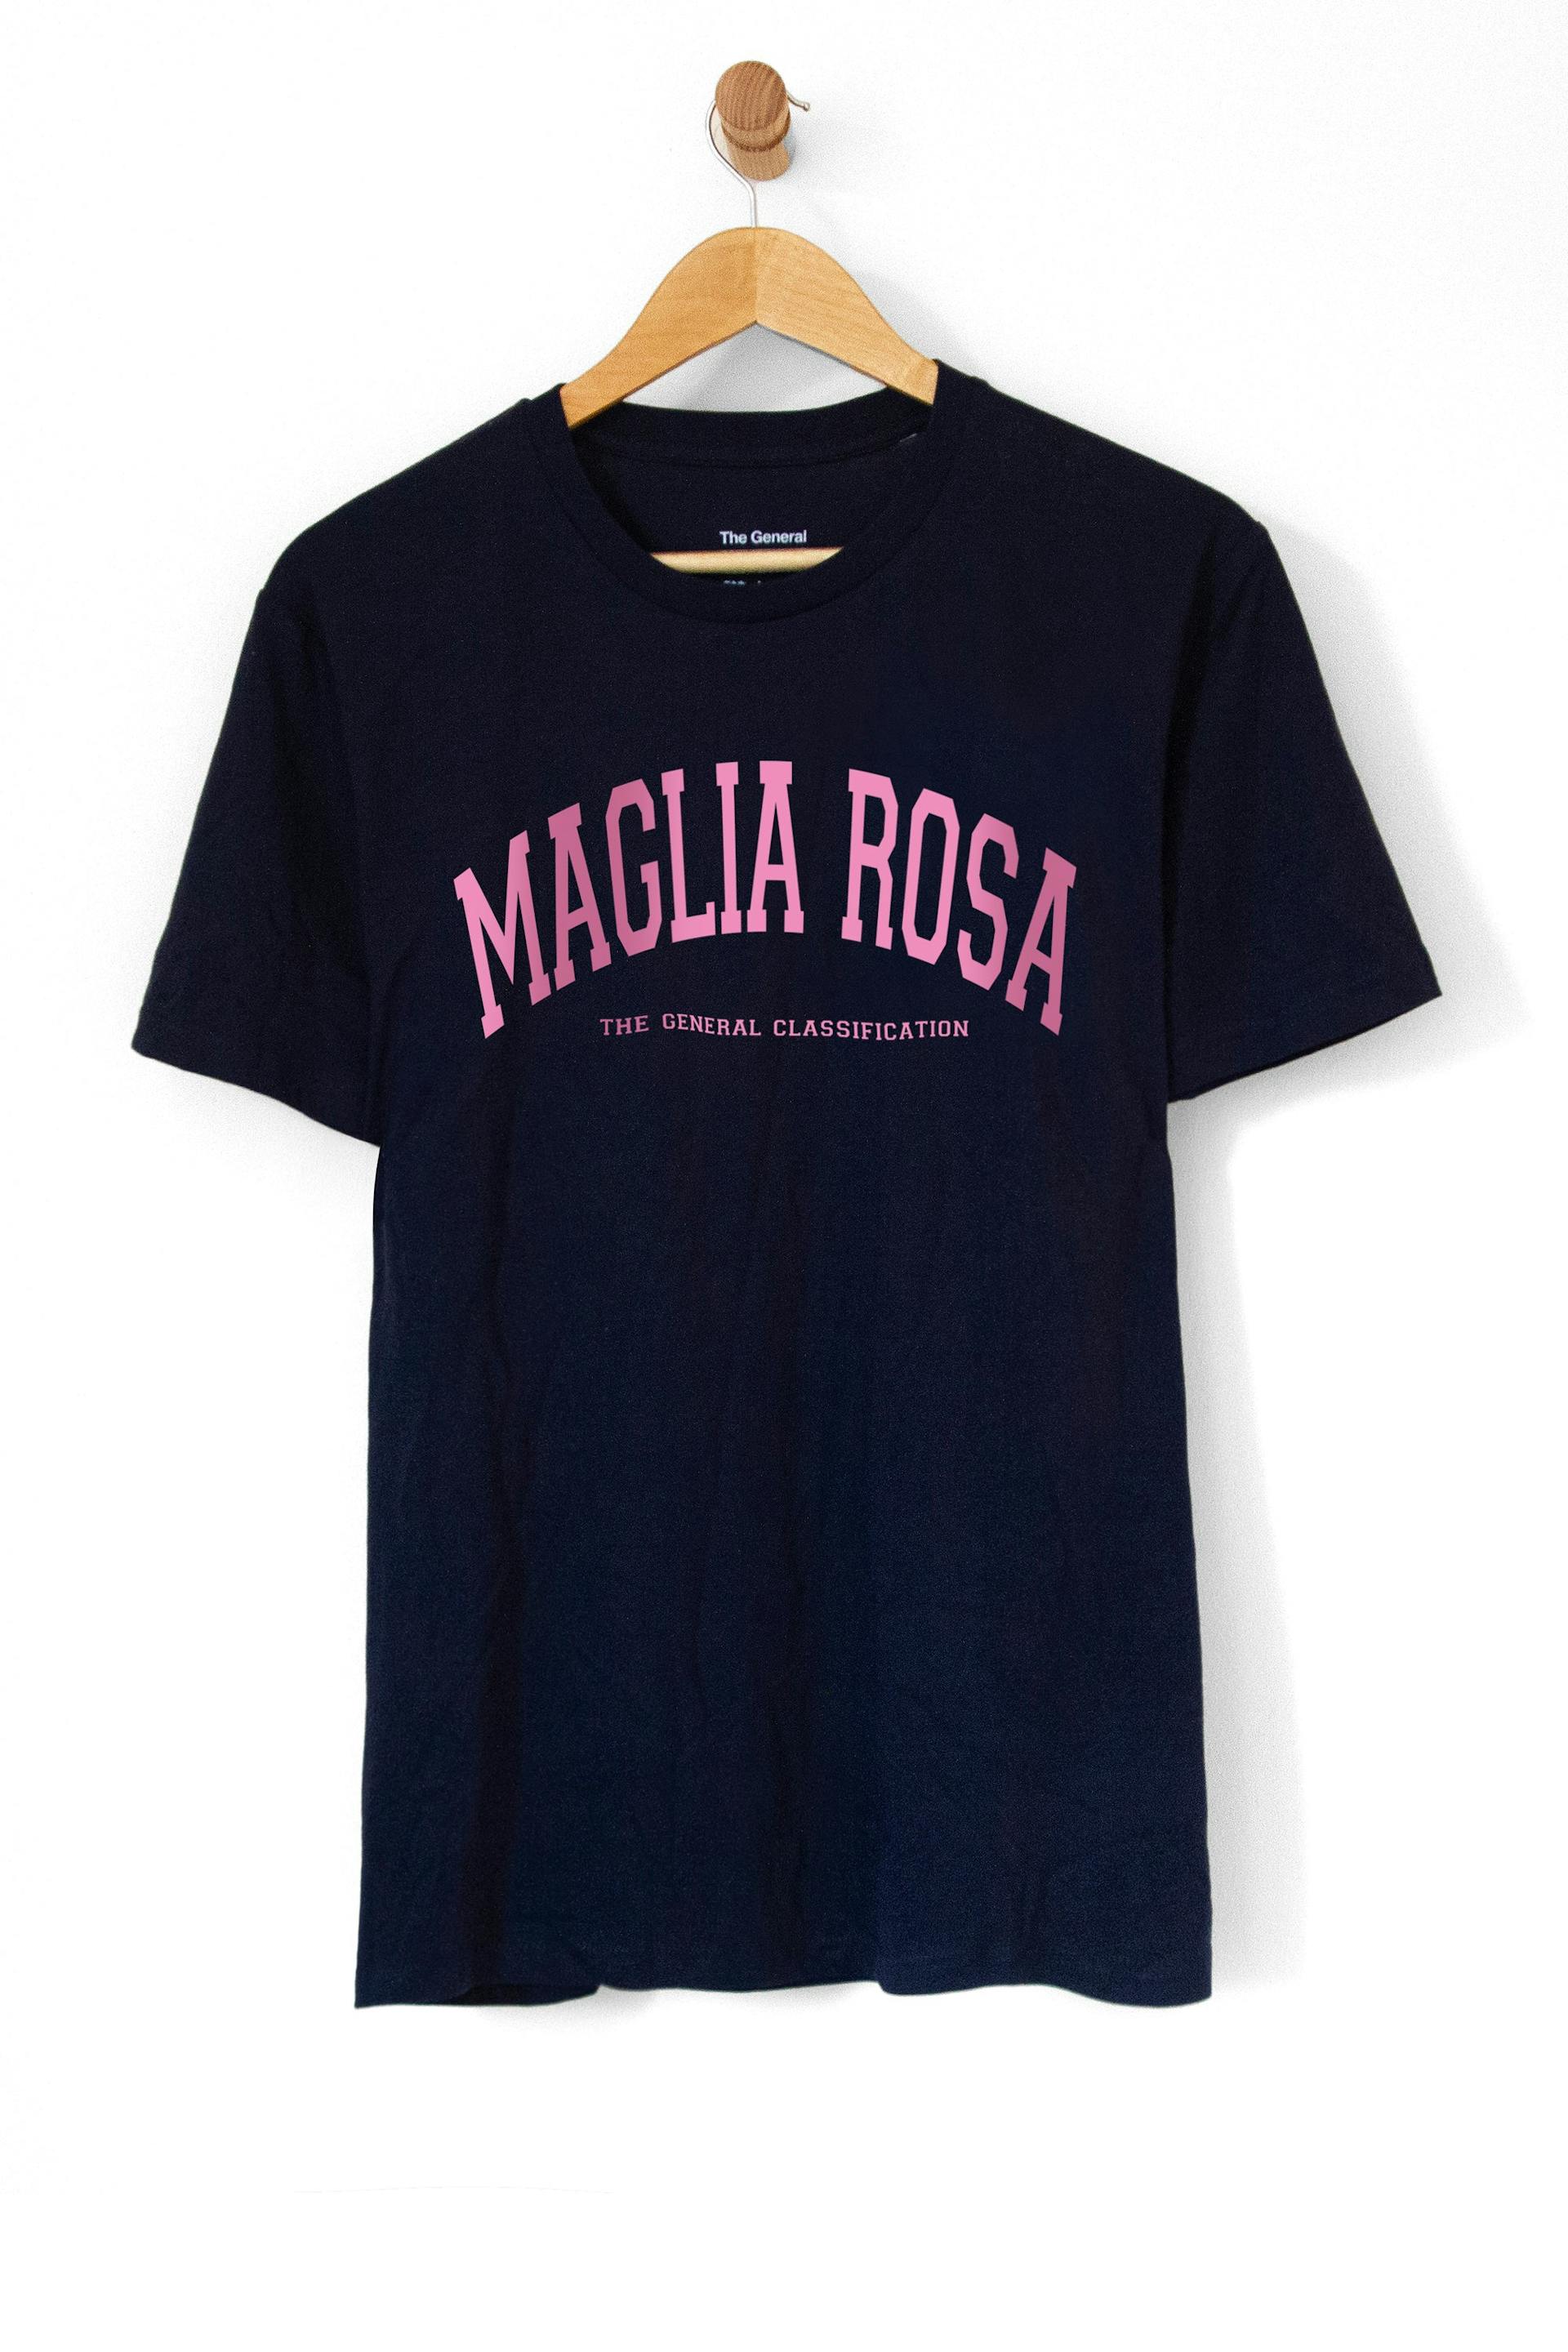 Maglia Rosa Tee Navy